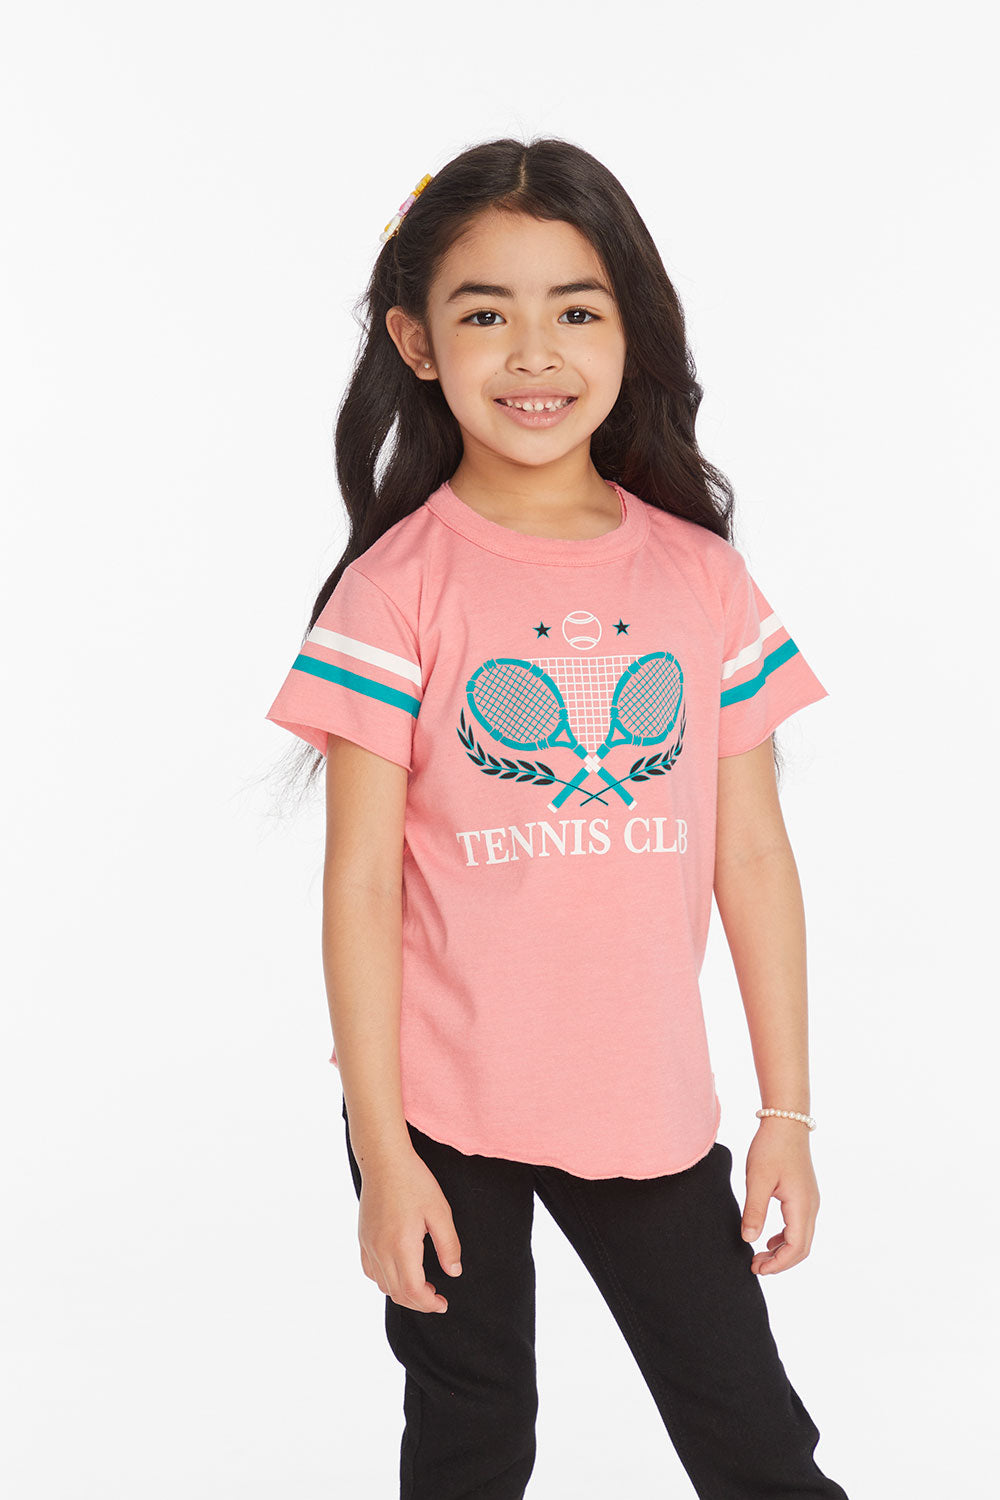 Tennis Club Girls Tee Girls chaserbrand